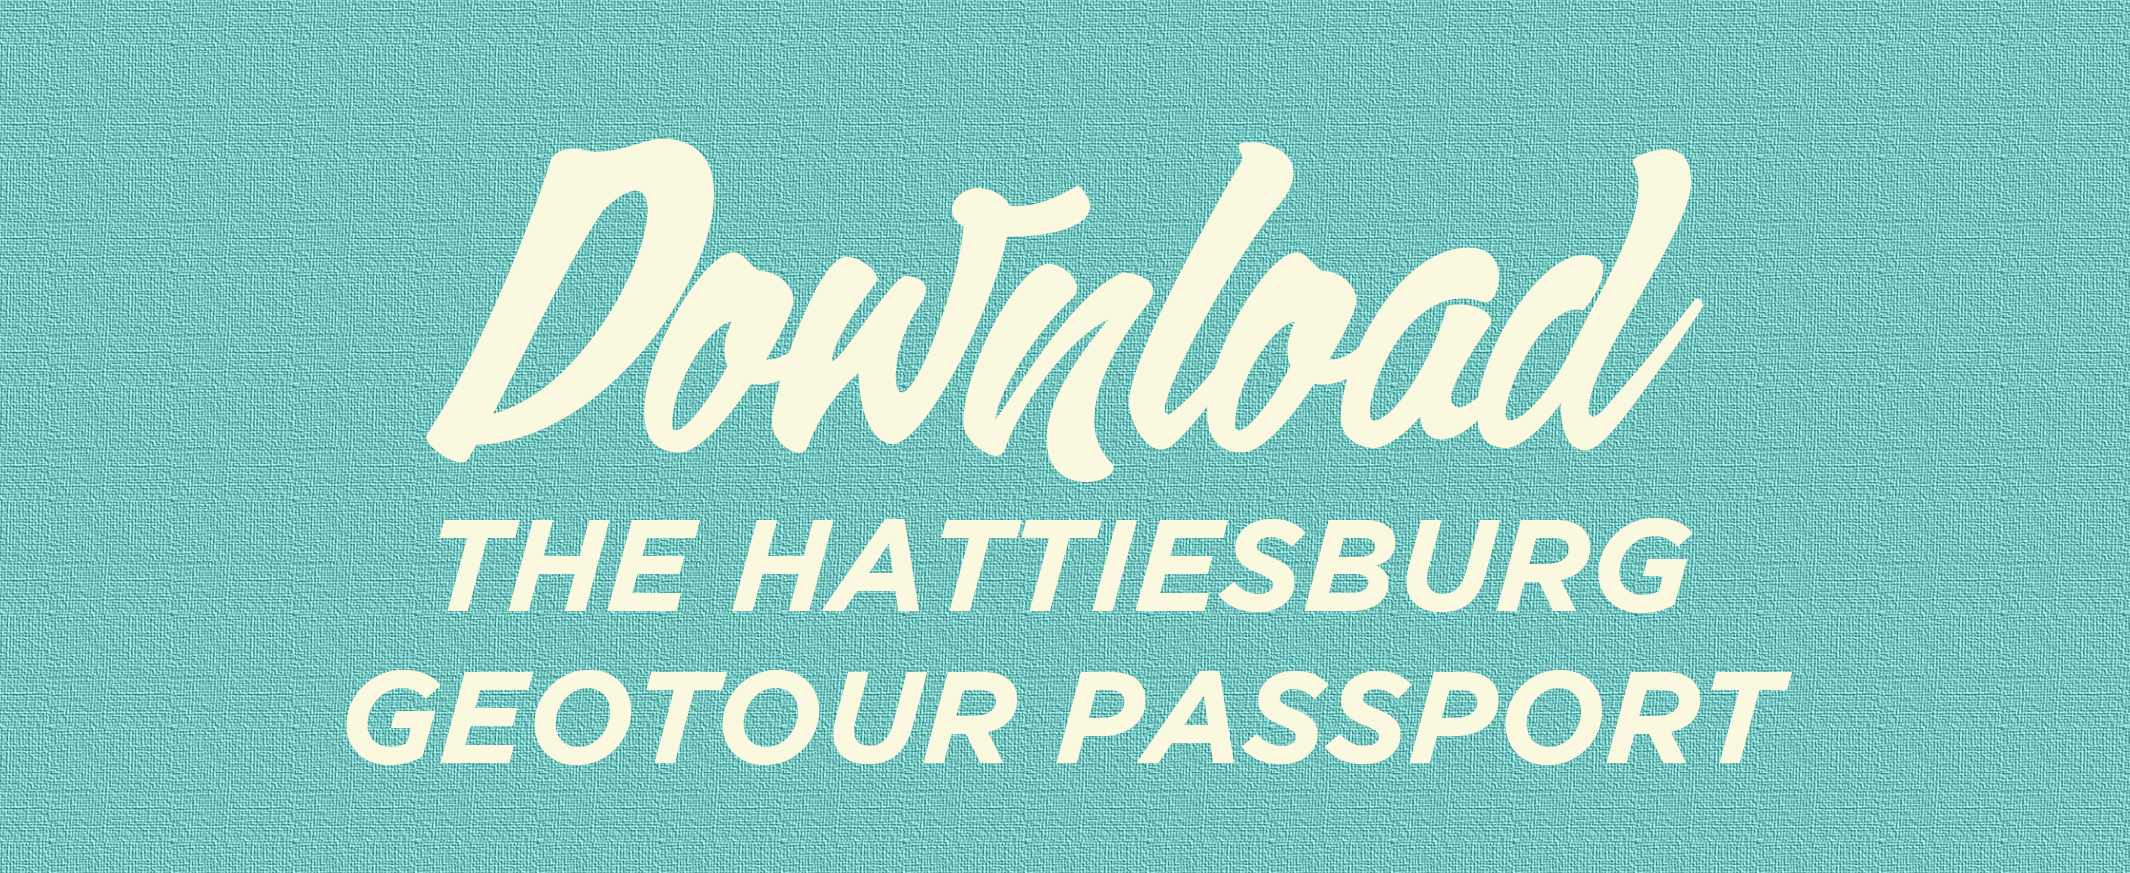 Download Geotour Passport button